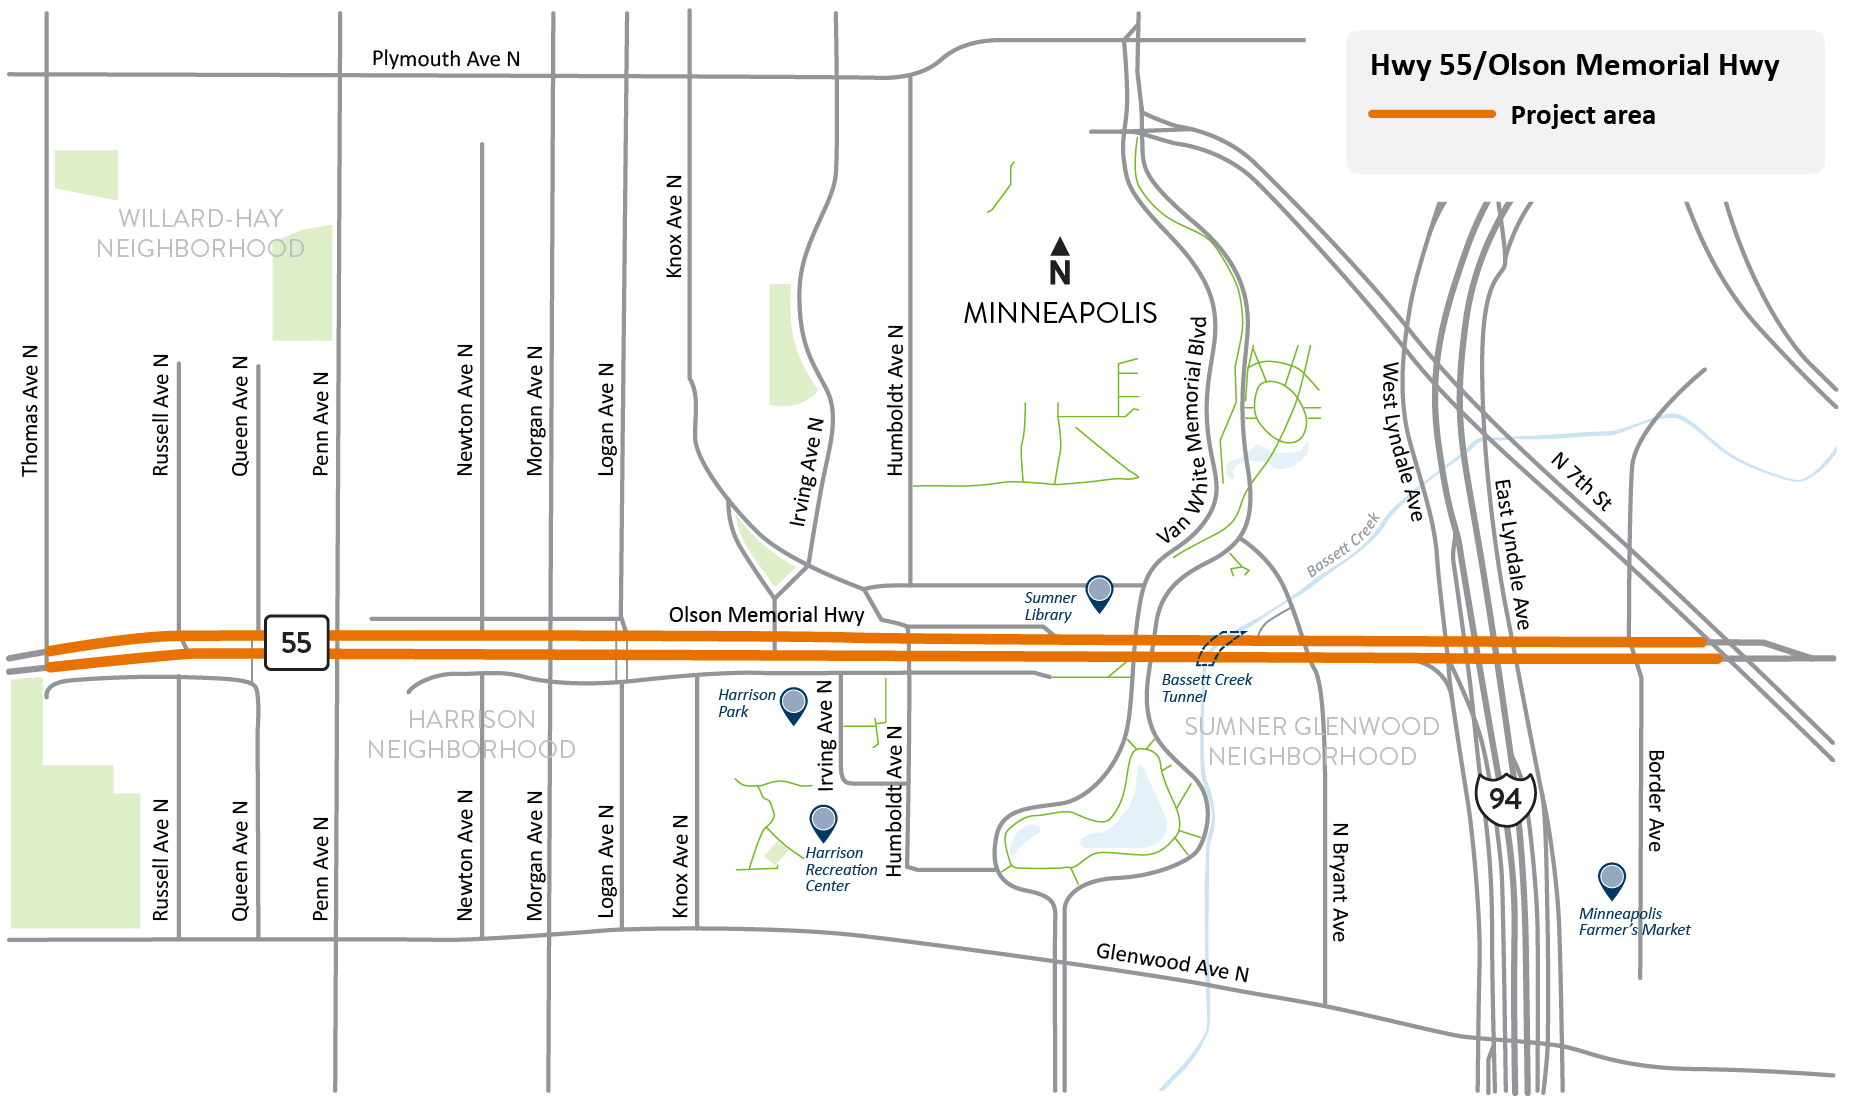 Highway 55/Olson Memorial Highway project area map